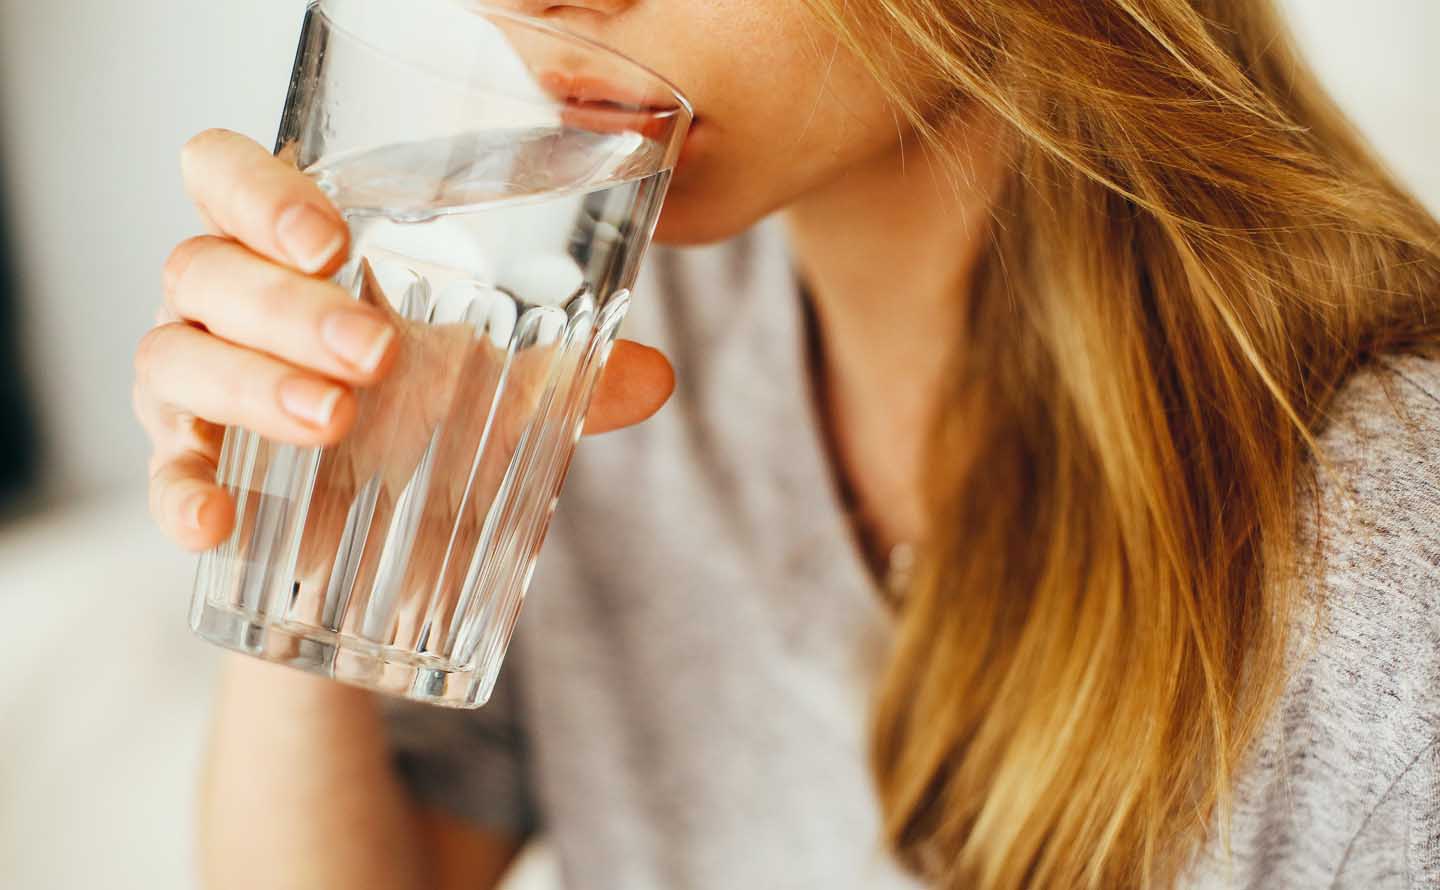 Drinking water avoids kidney stones - Photo by Daria Shevtsova from Pexels